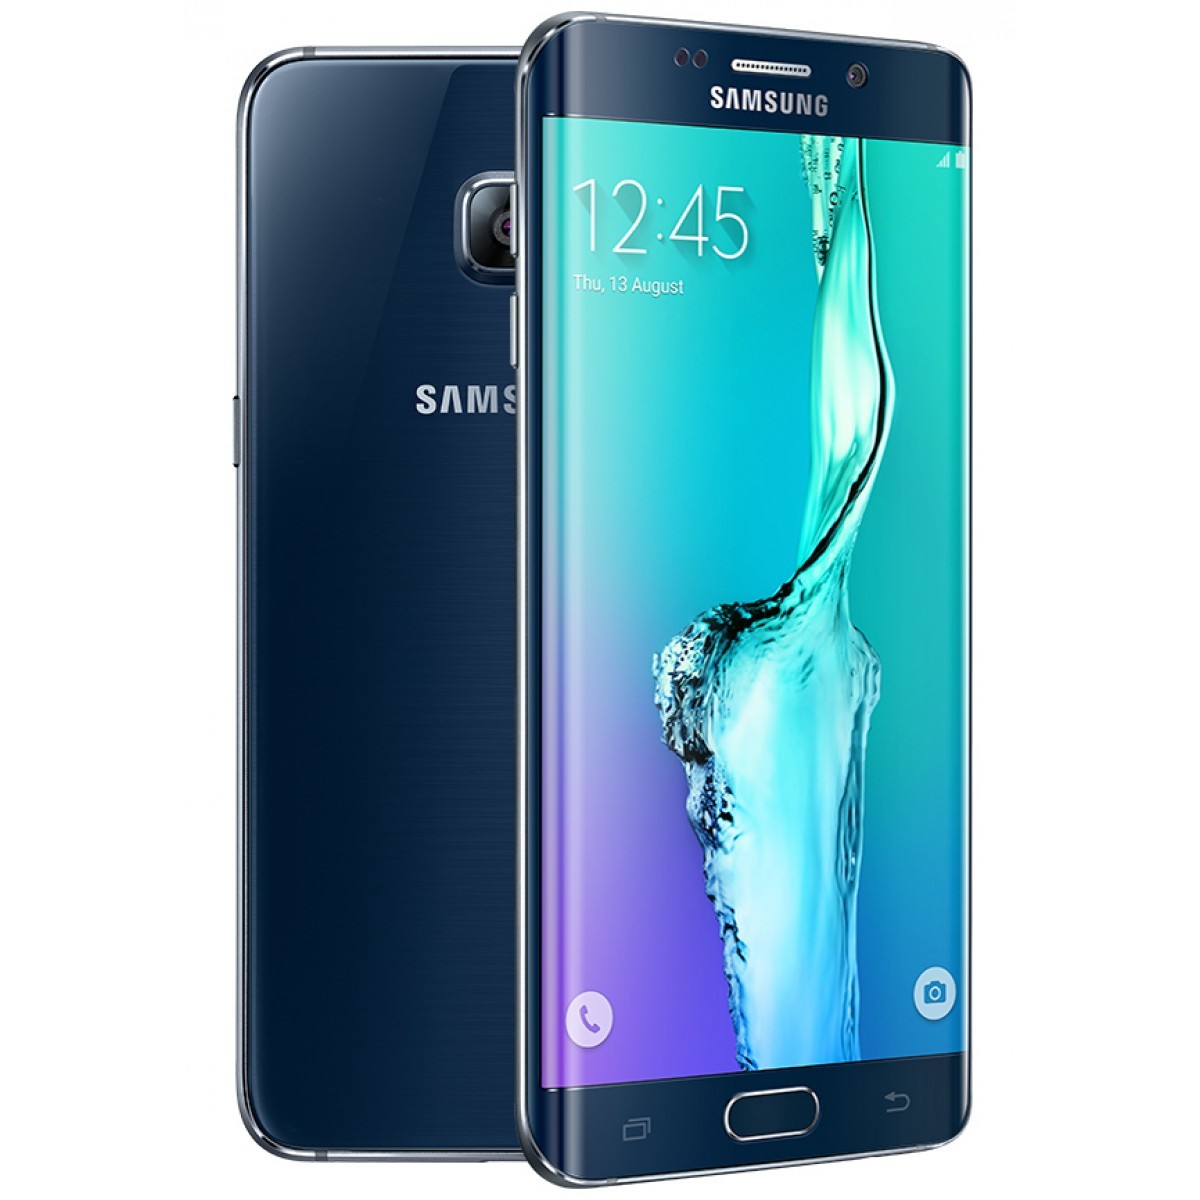 Самсунг телефон новинка цены. Samsung Galaxy s6 Edge. Samsung 6 Edge. Samsung Galaxy s6 Edge+ 32gb. Samsung Galaxy s6 Edge + 32 ГБ.